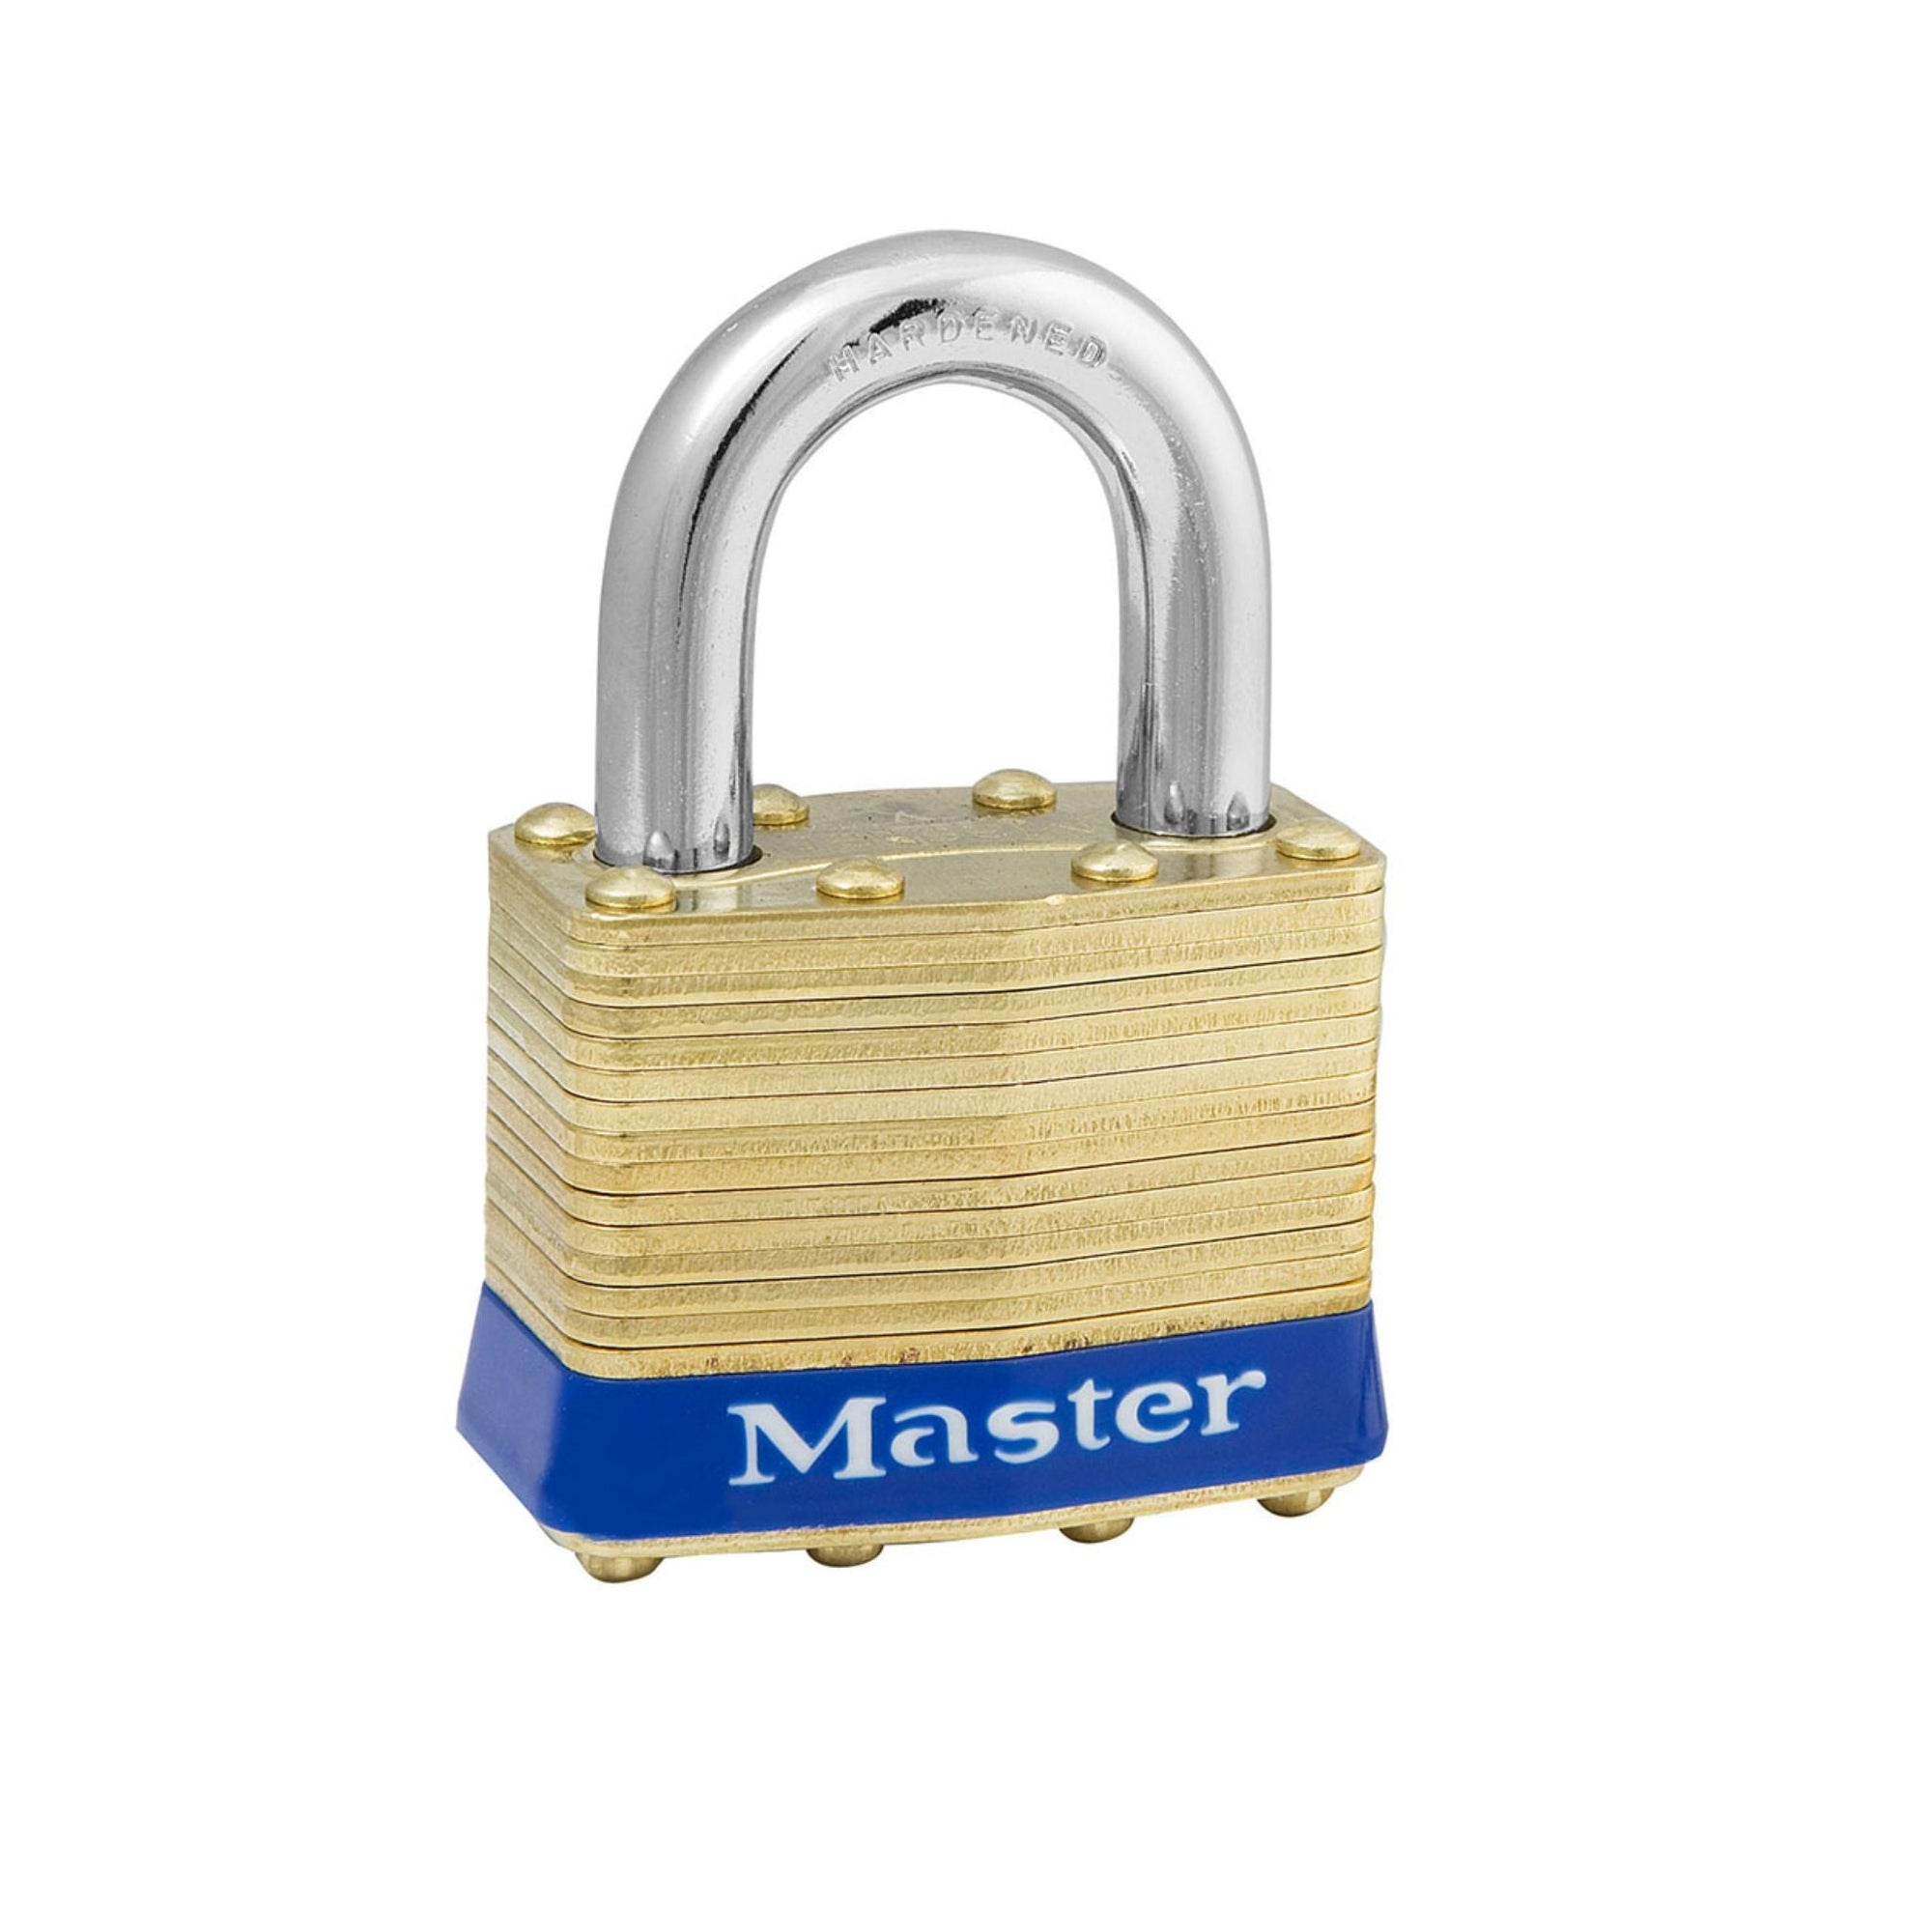 Master Lock 2KA 0320 Lock Laminated brass No. 2 Series Padlock Keyed to Match Existing Key Number KA0320 - The Lock Source